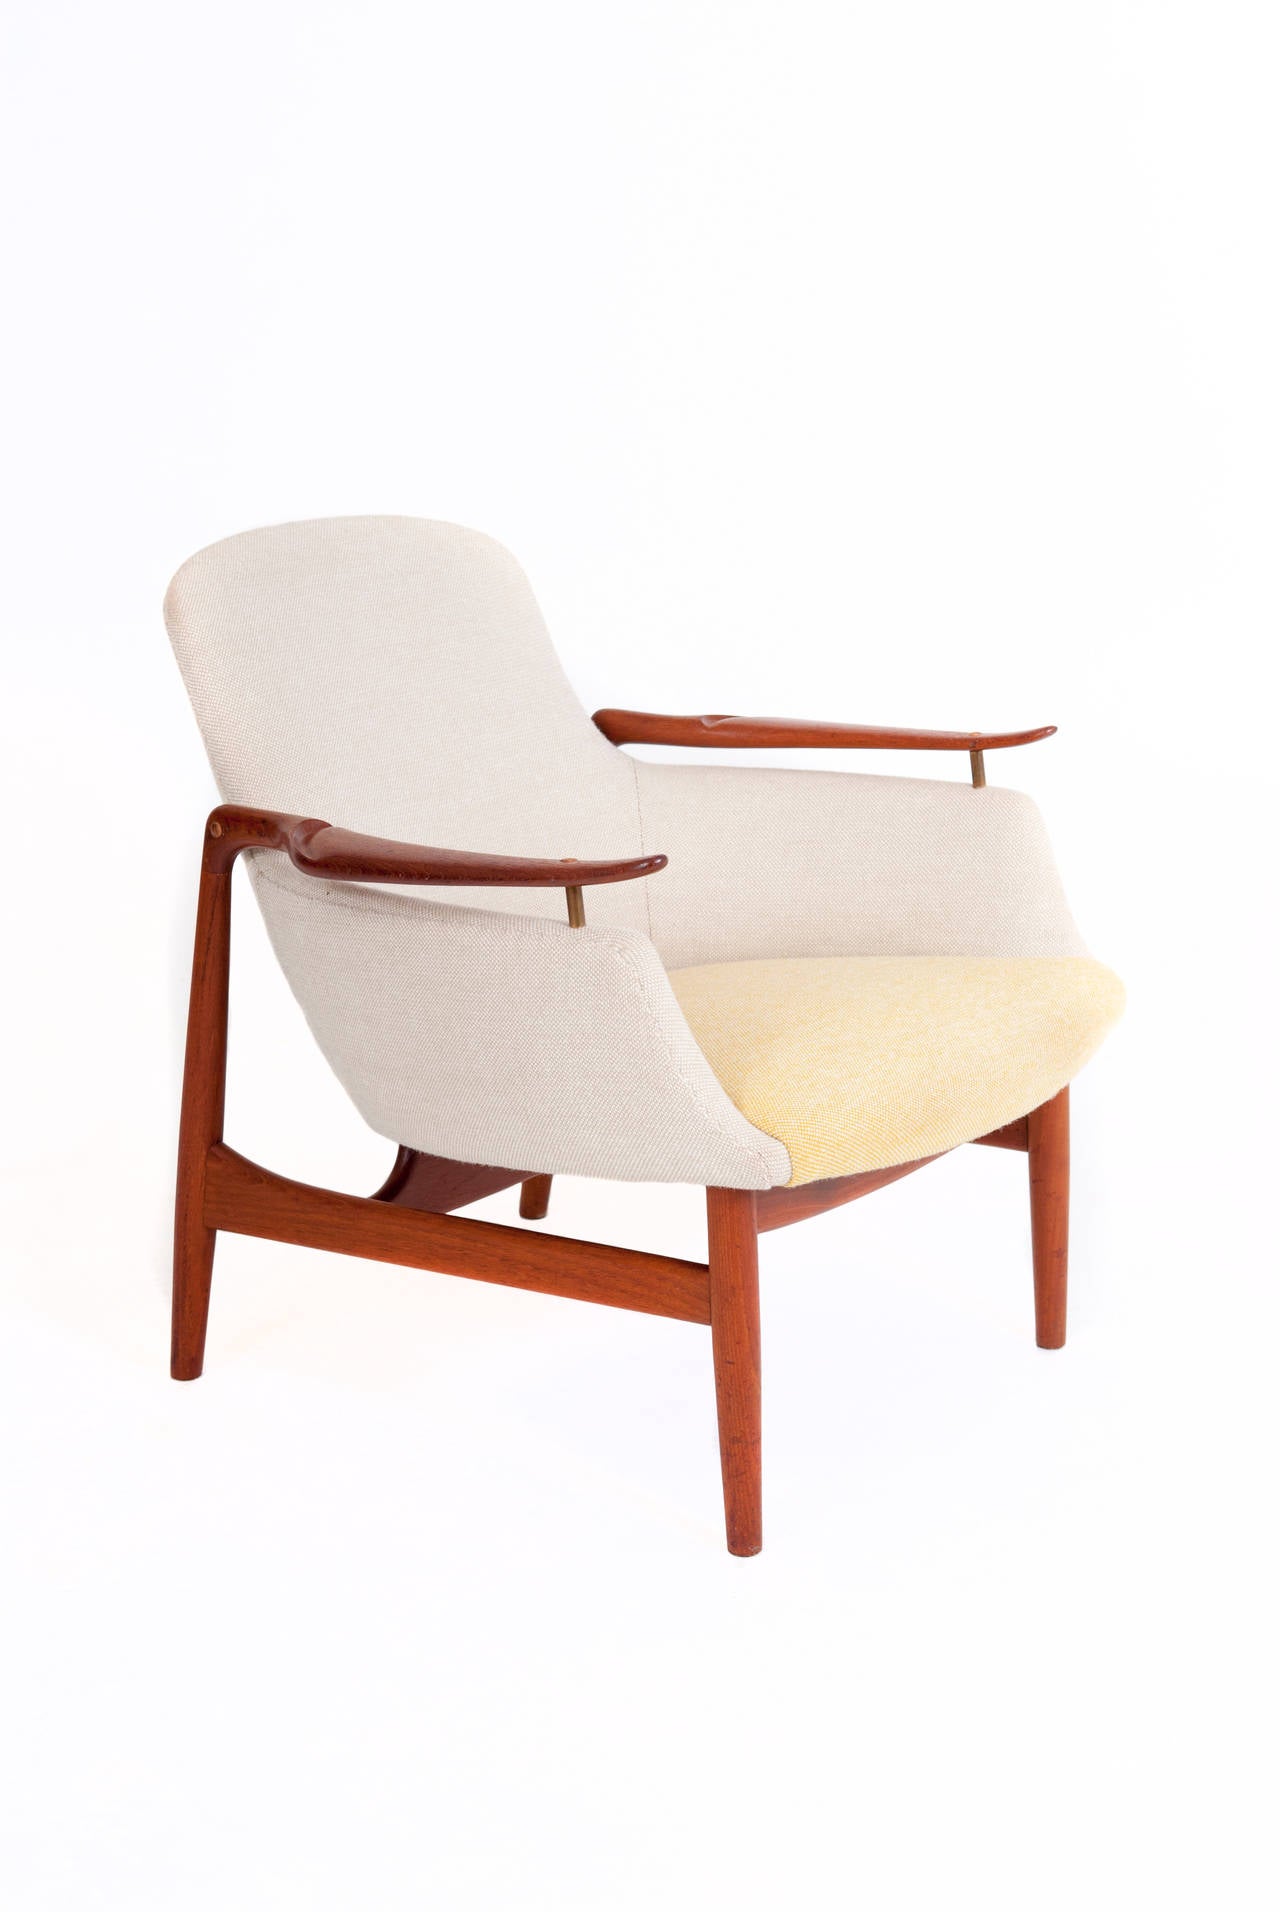 Scandinavian Modern Finn Juhl Lounge Chair by Niels Vodder